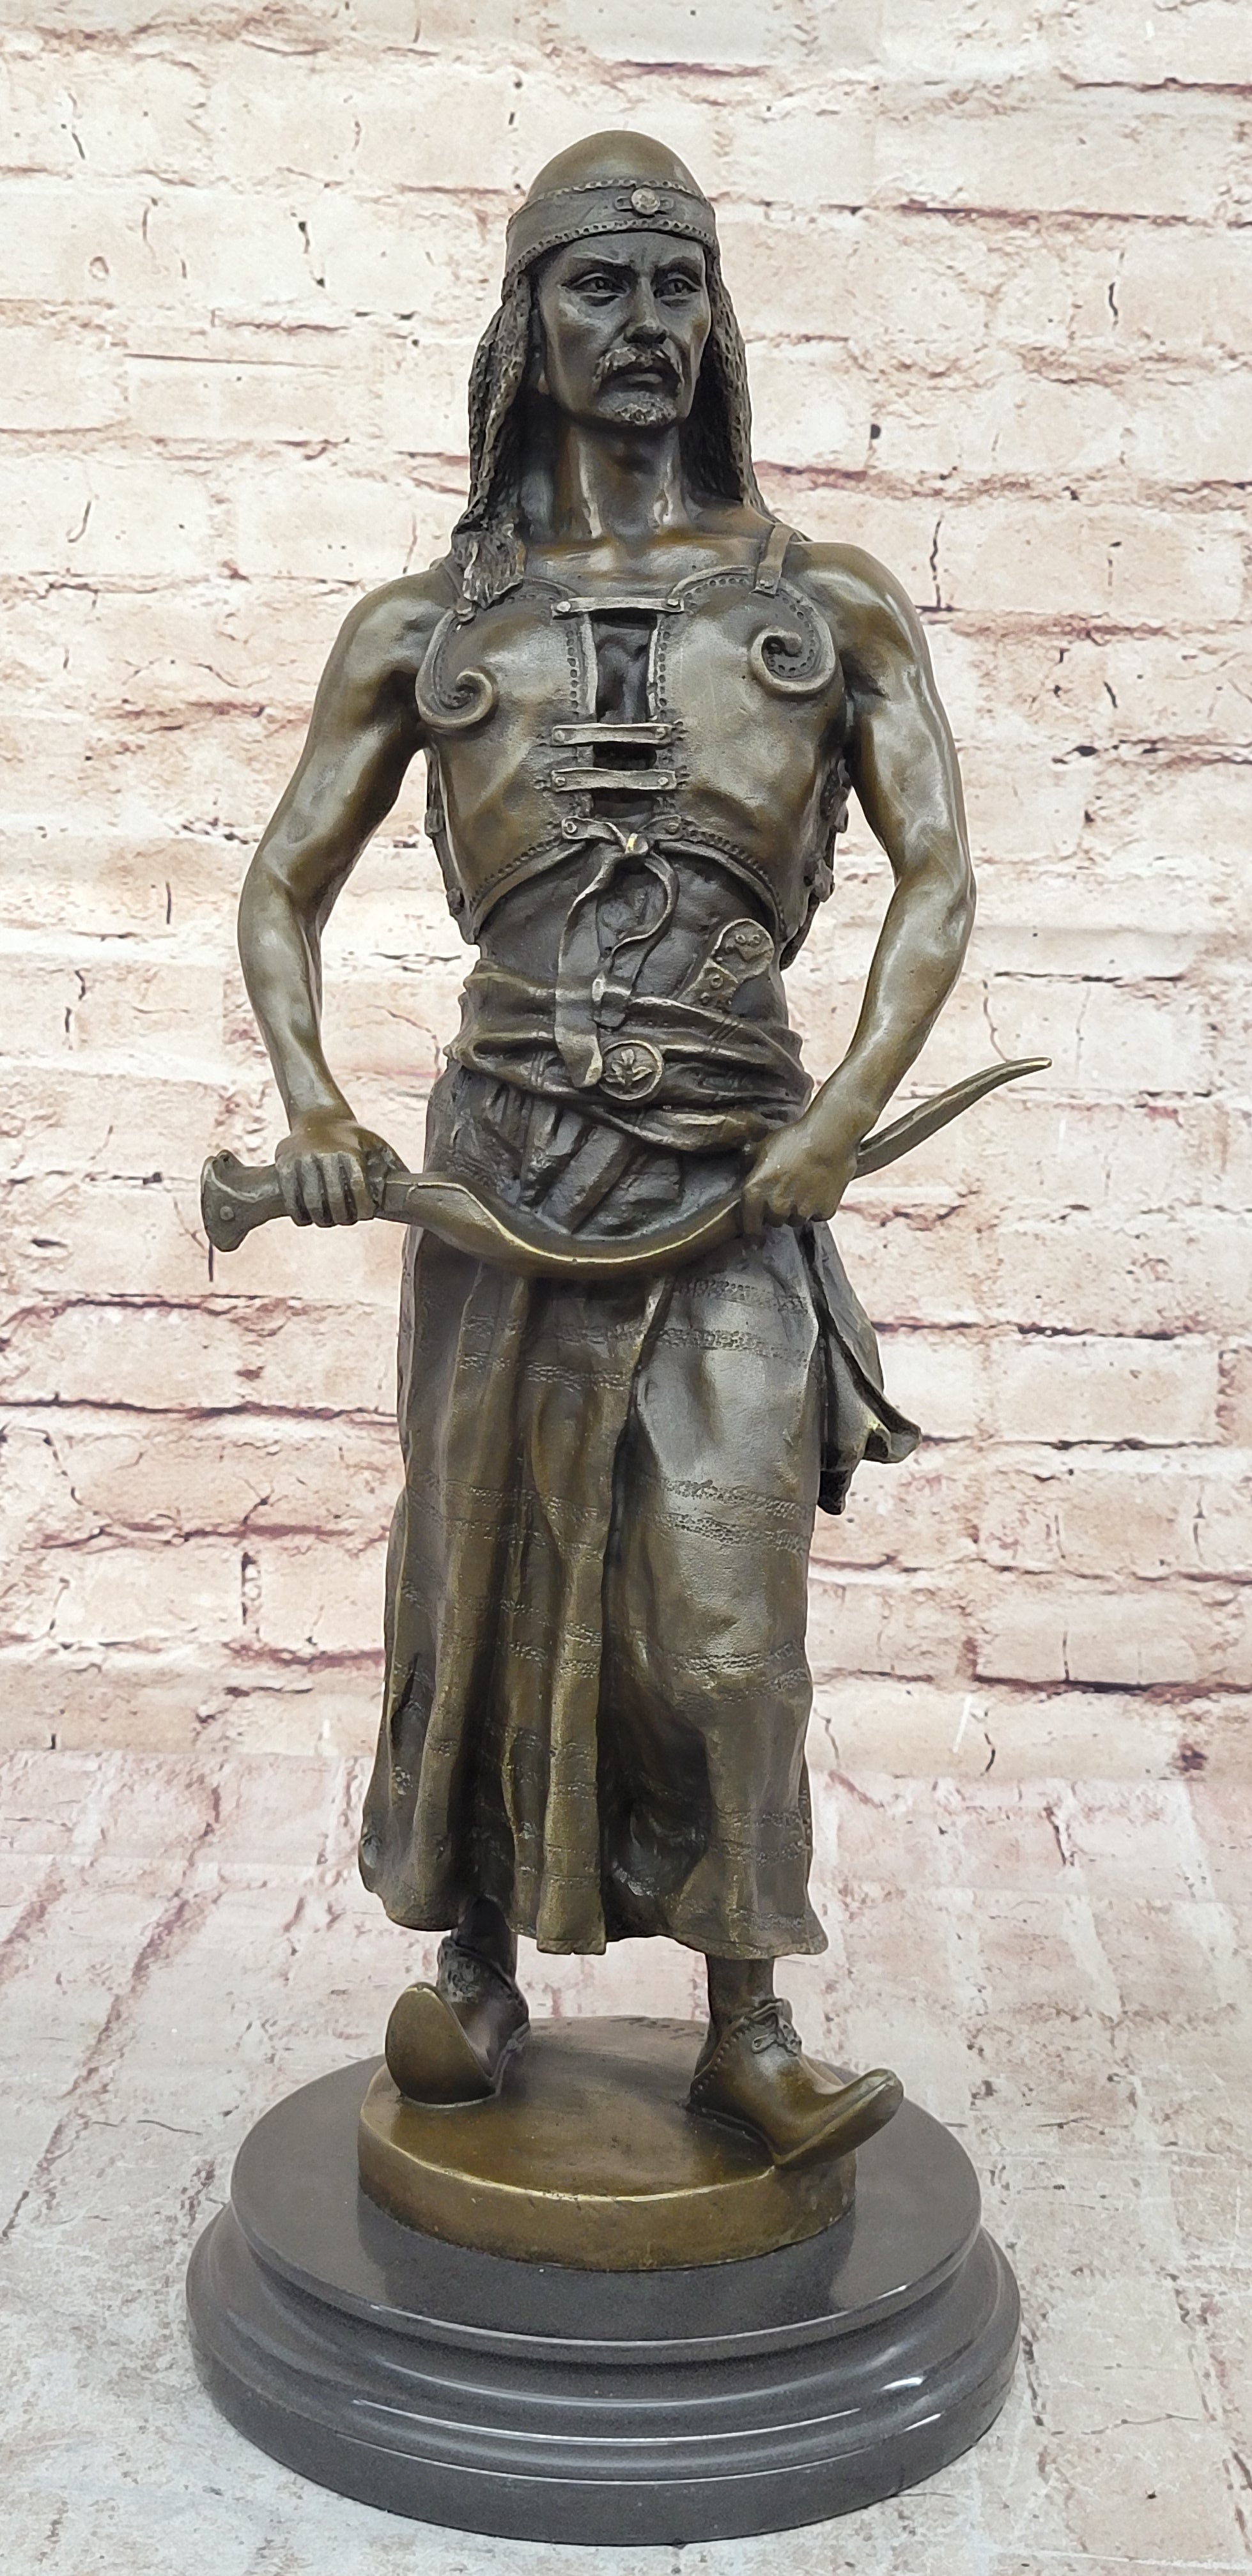 100% Pure Genuine Bronze Sculpture of Arab Guy Middle Eastern Man Statue Figure